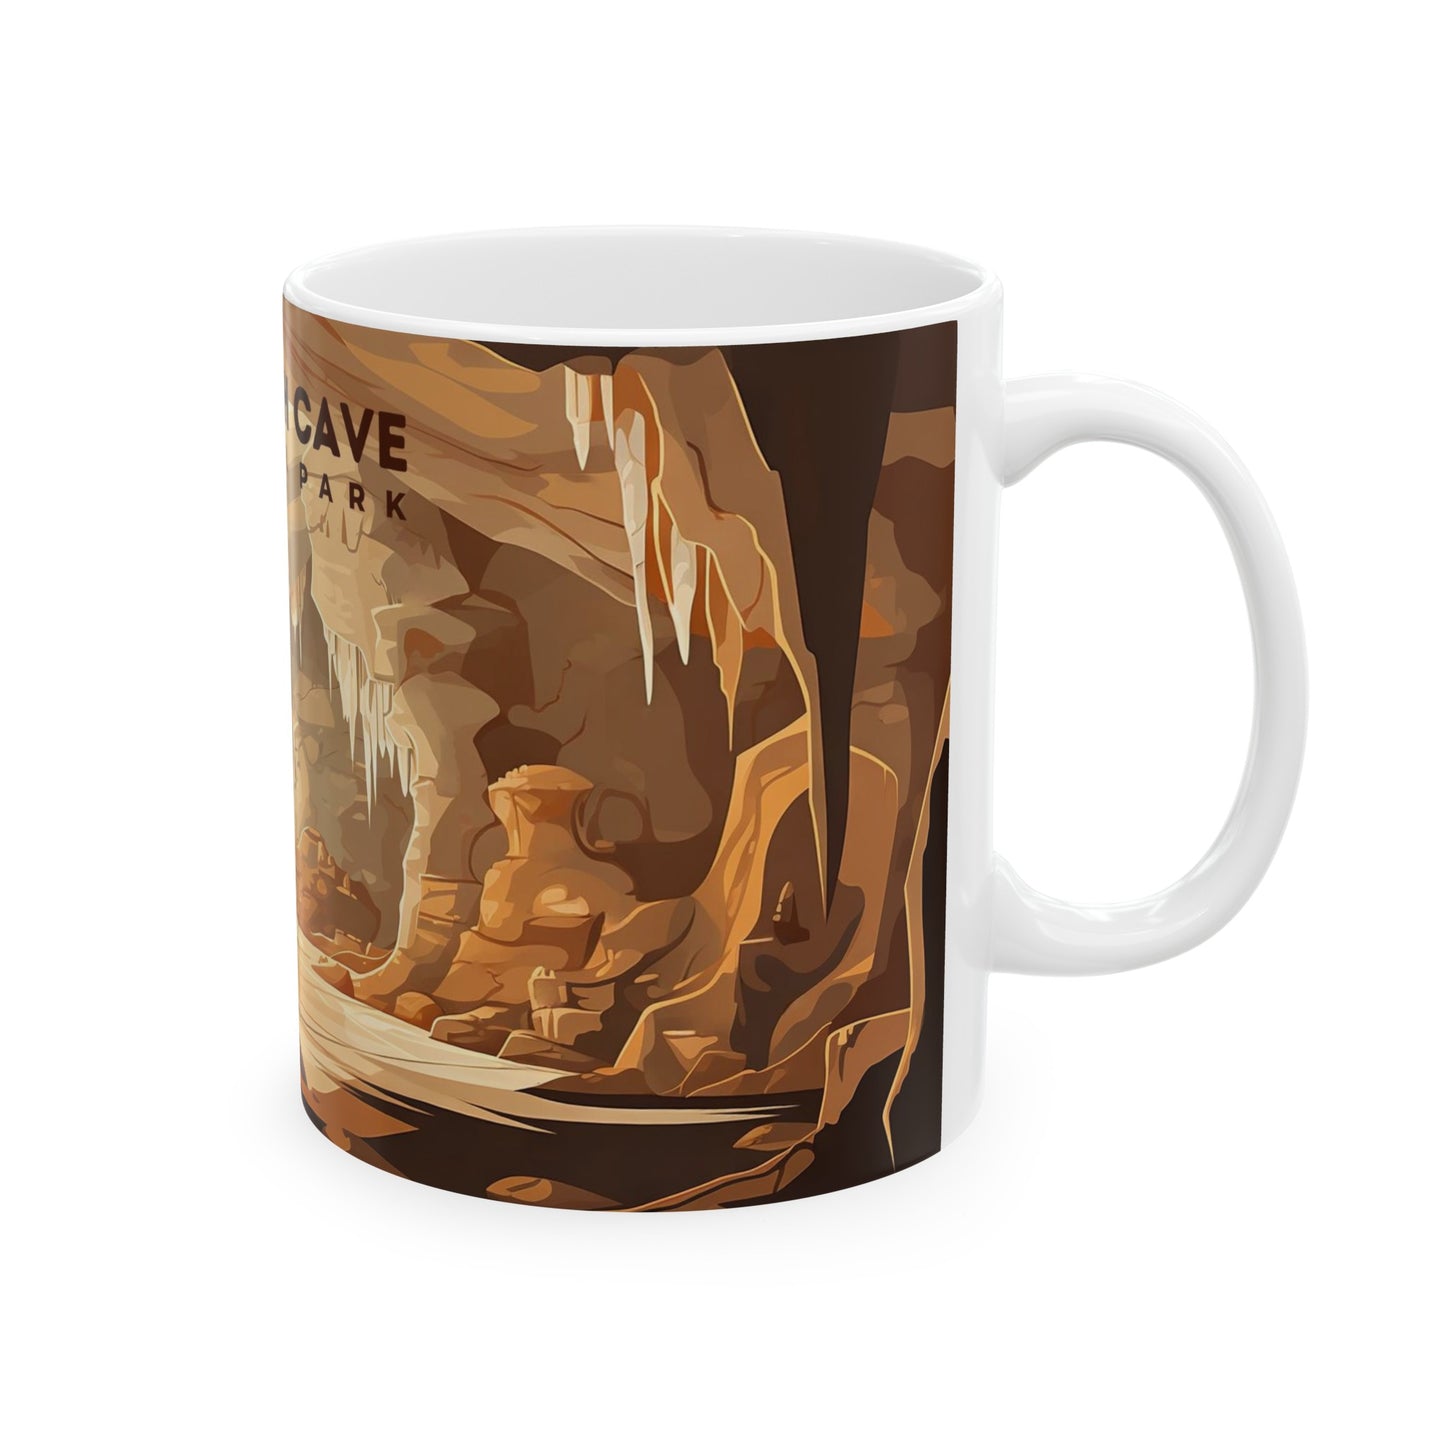 Mammoth Cave National Park Mug | White Ceramic Mug (11oz, 15oz)